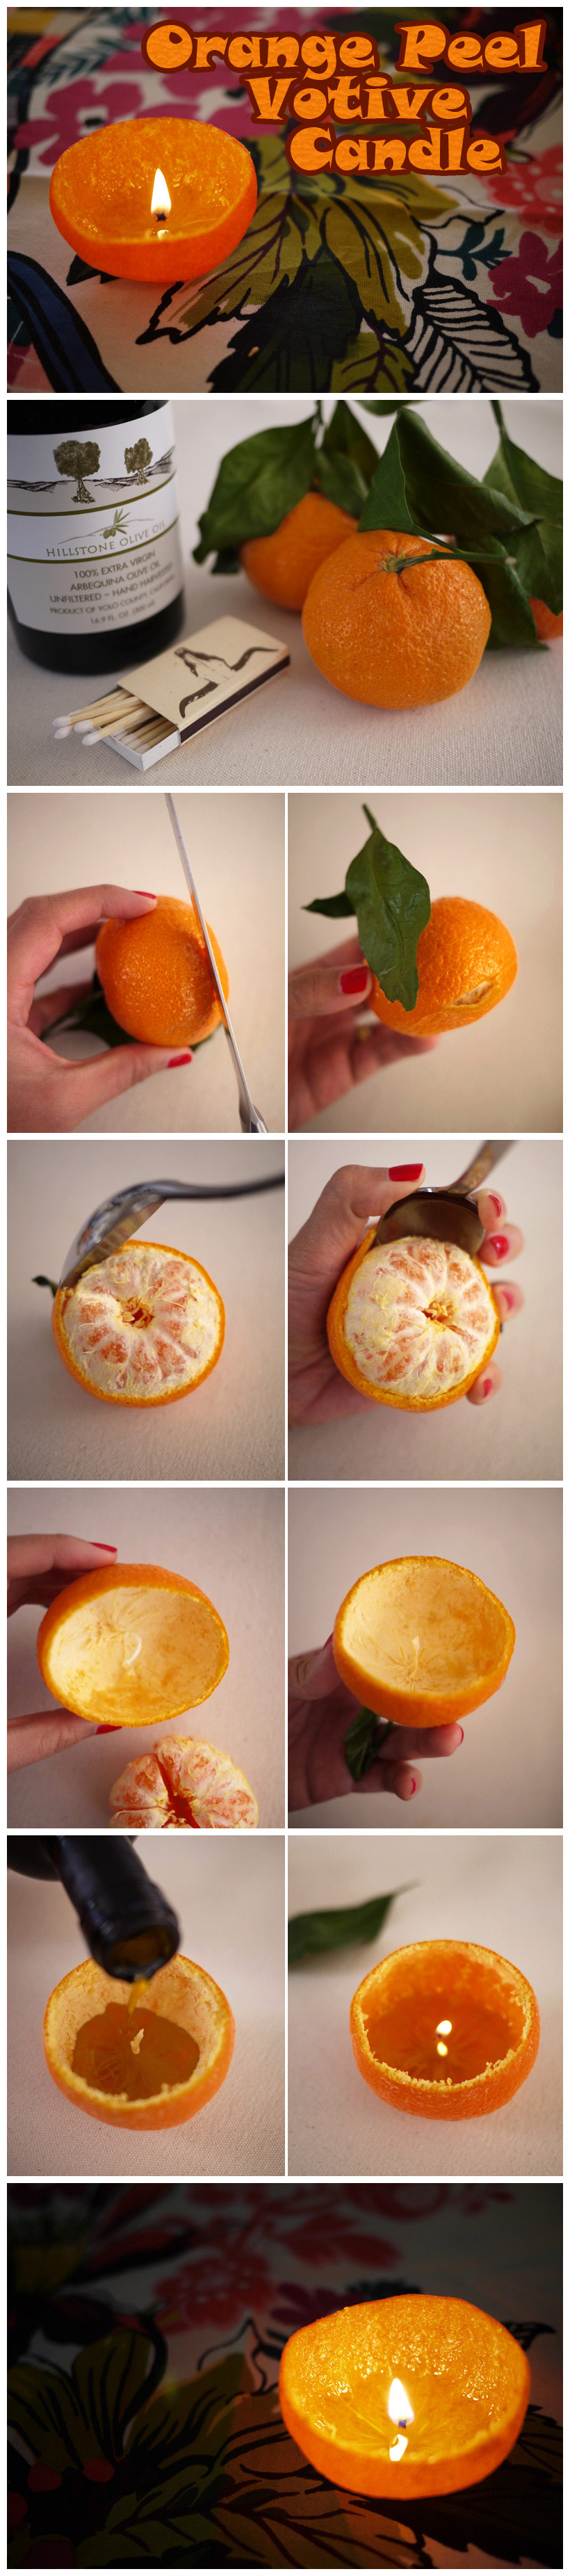 how to make orange peel candle